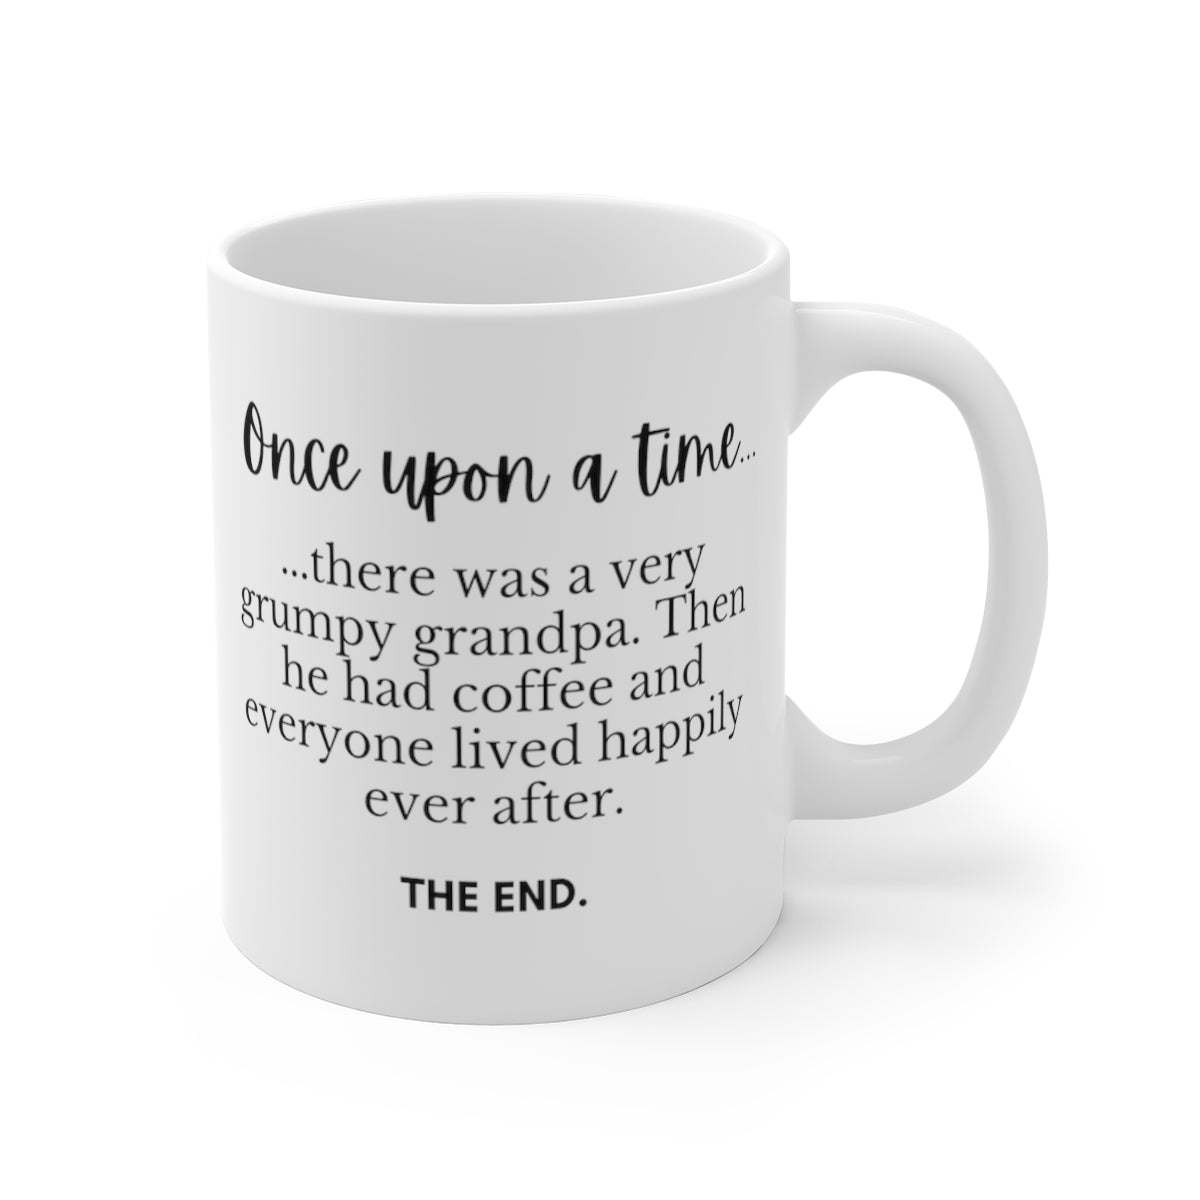 Once Upon A Time There Was A Very Grumpy Grandpa. Then He Had Coffee... | Funny Mug for Coffee Lovers | Mug 11oz